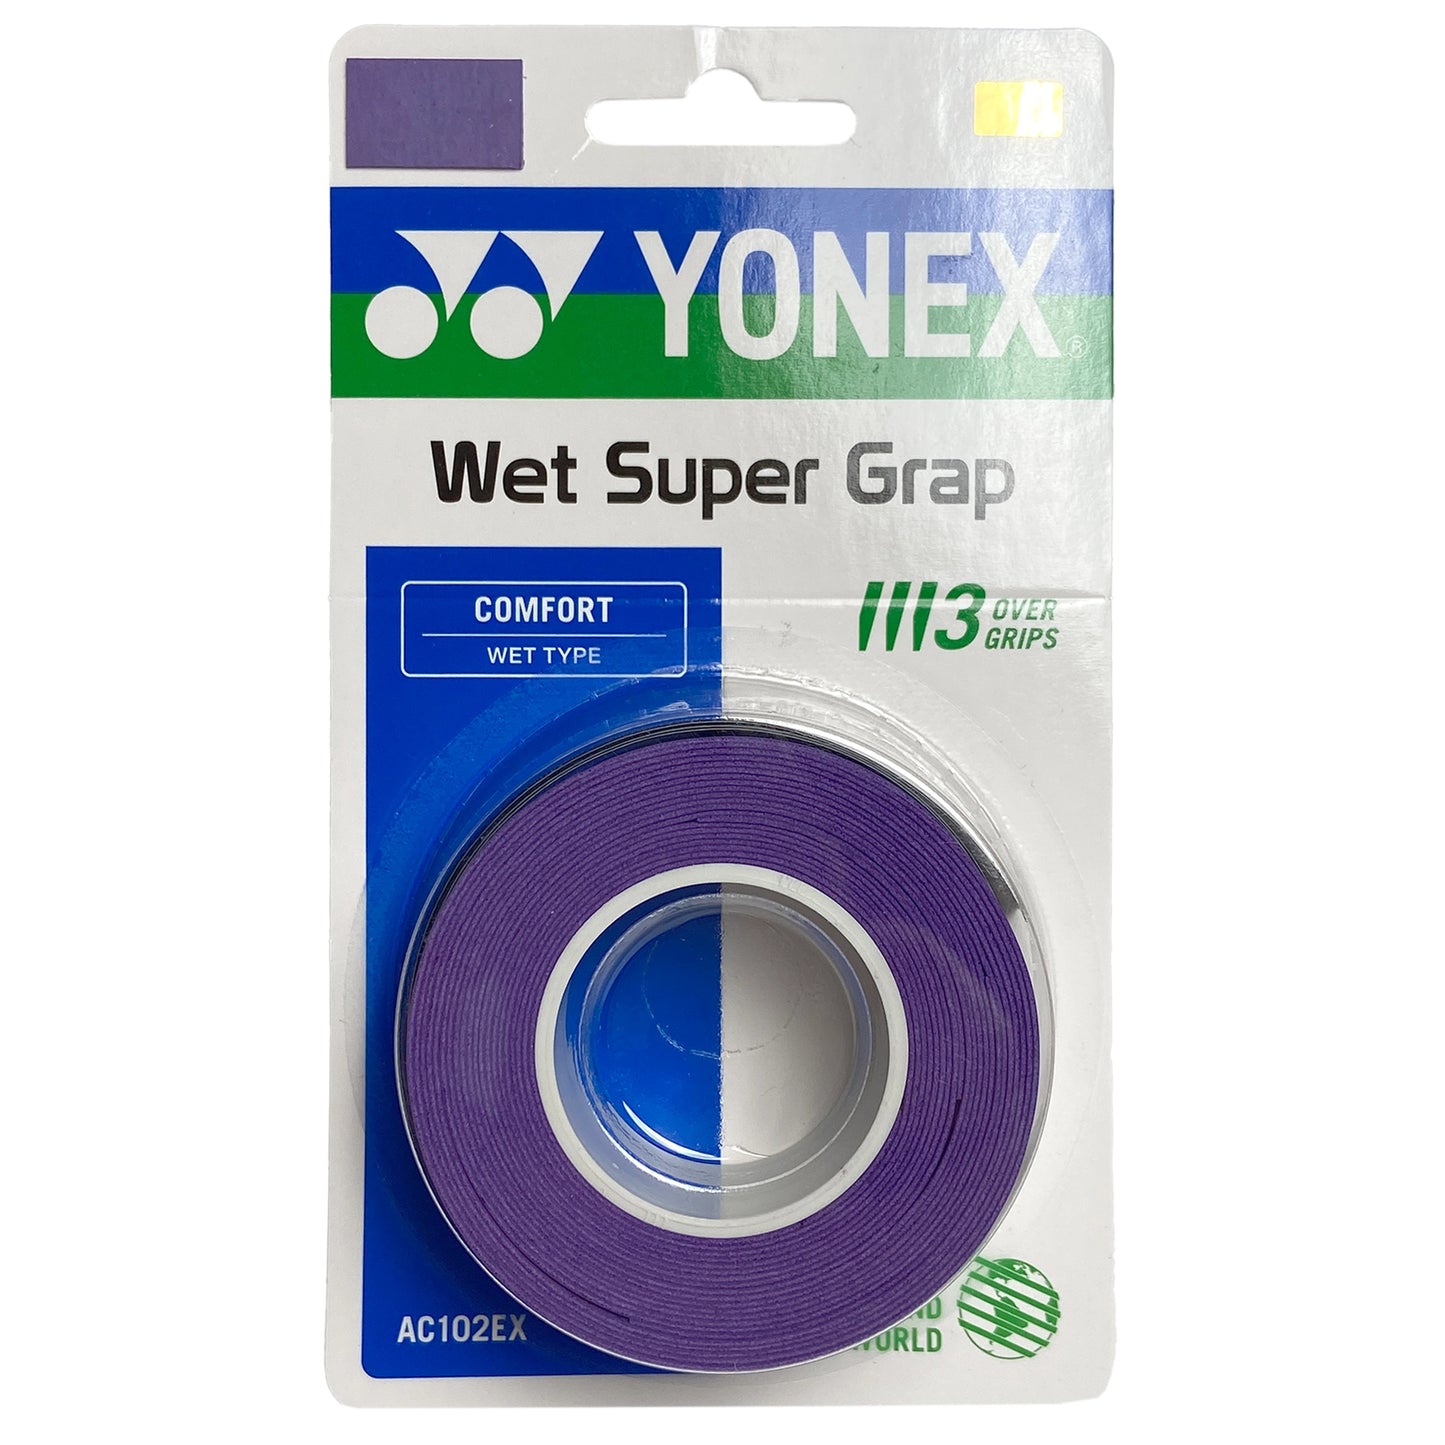 Yonex overgrip Wet Super Grap (3) Deep Purple